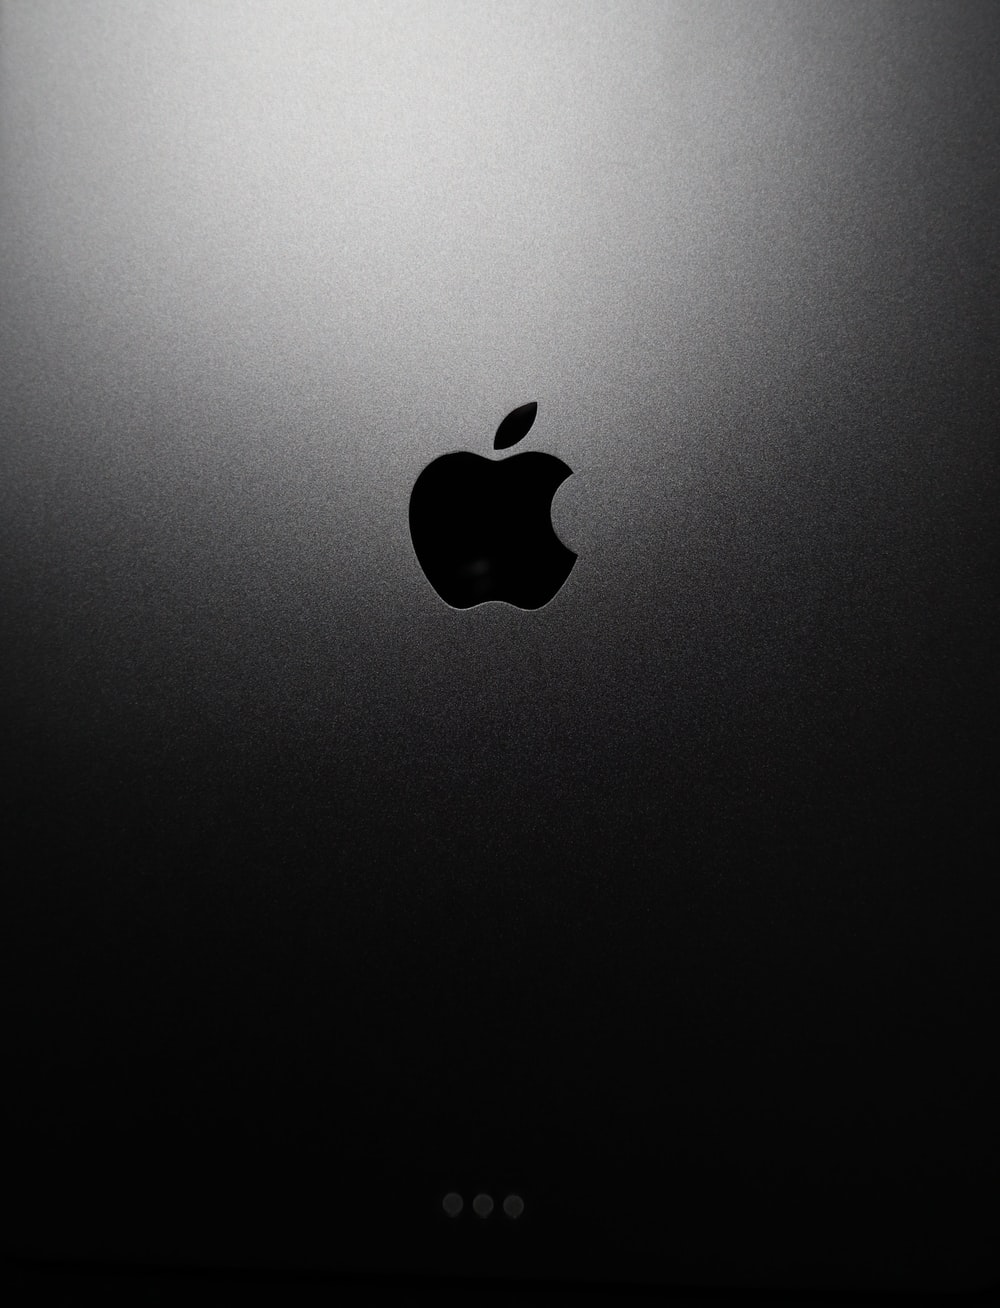 black apple logo on black surface: https://unsplash.com/photos/5TzYSqhKeyE